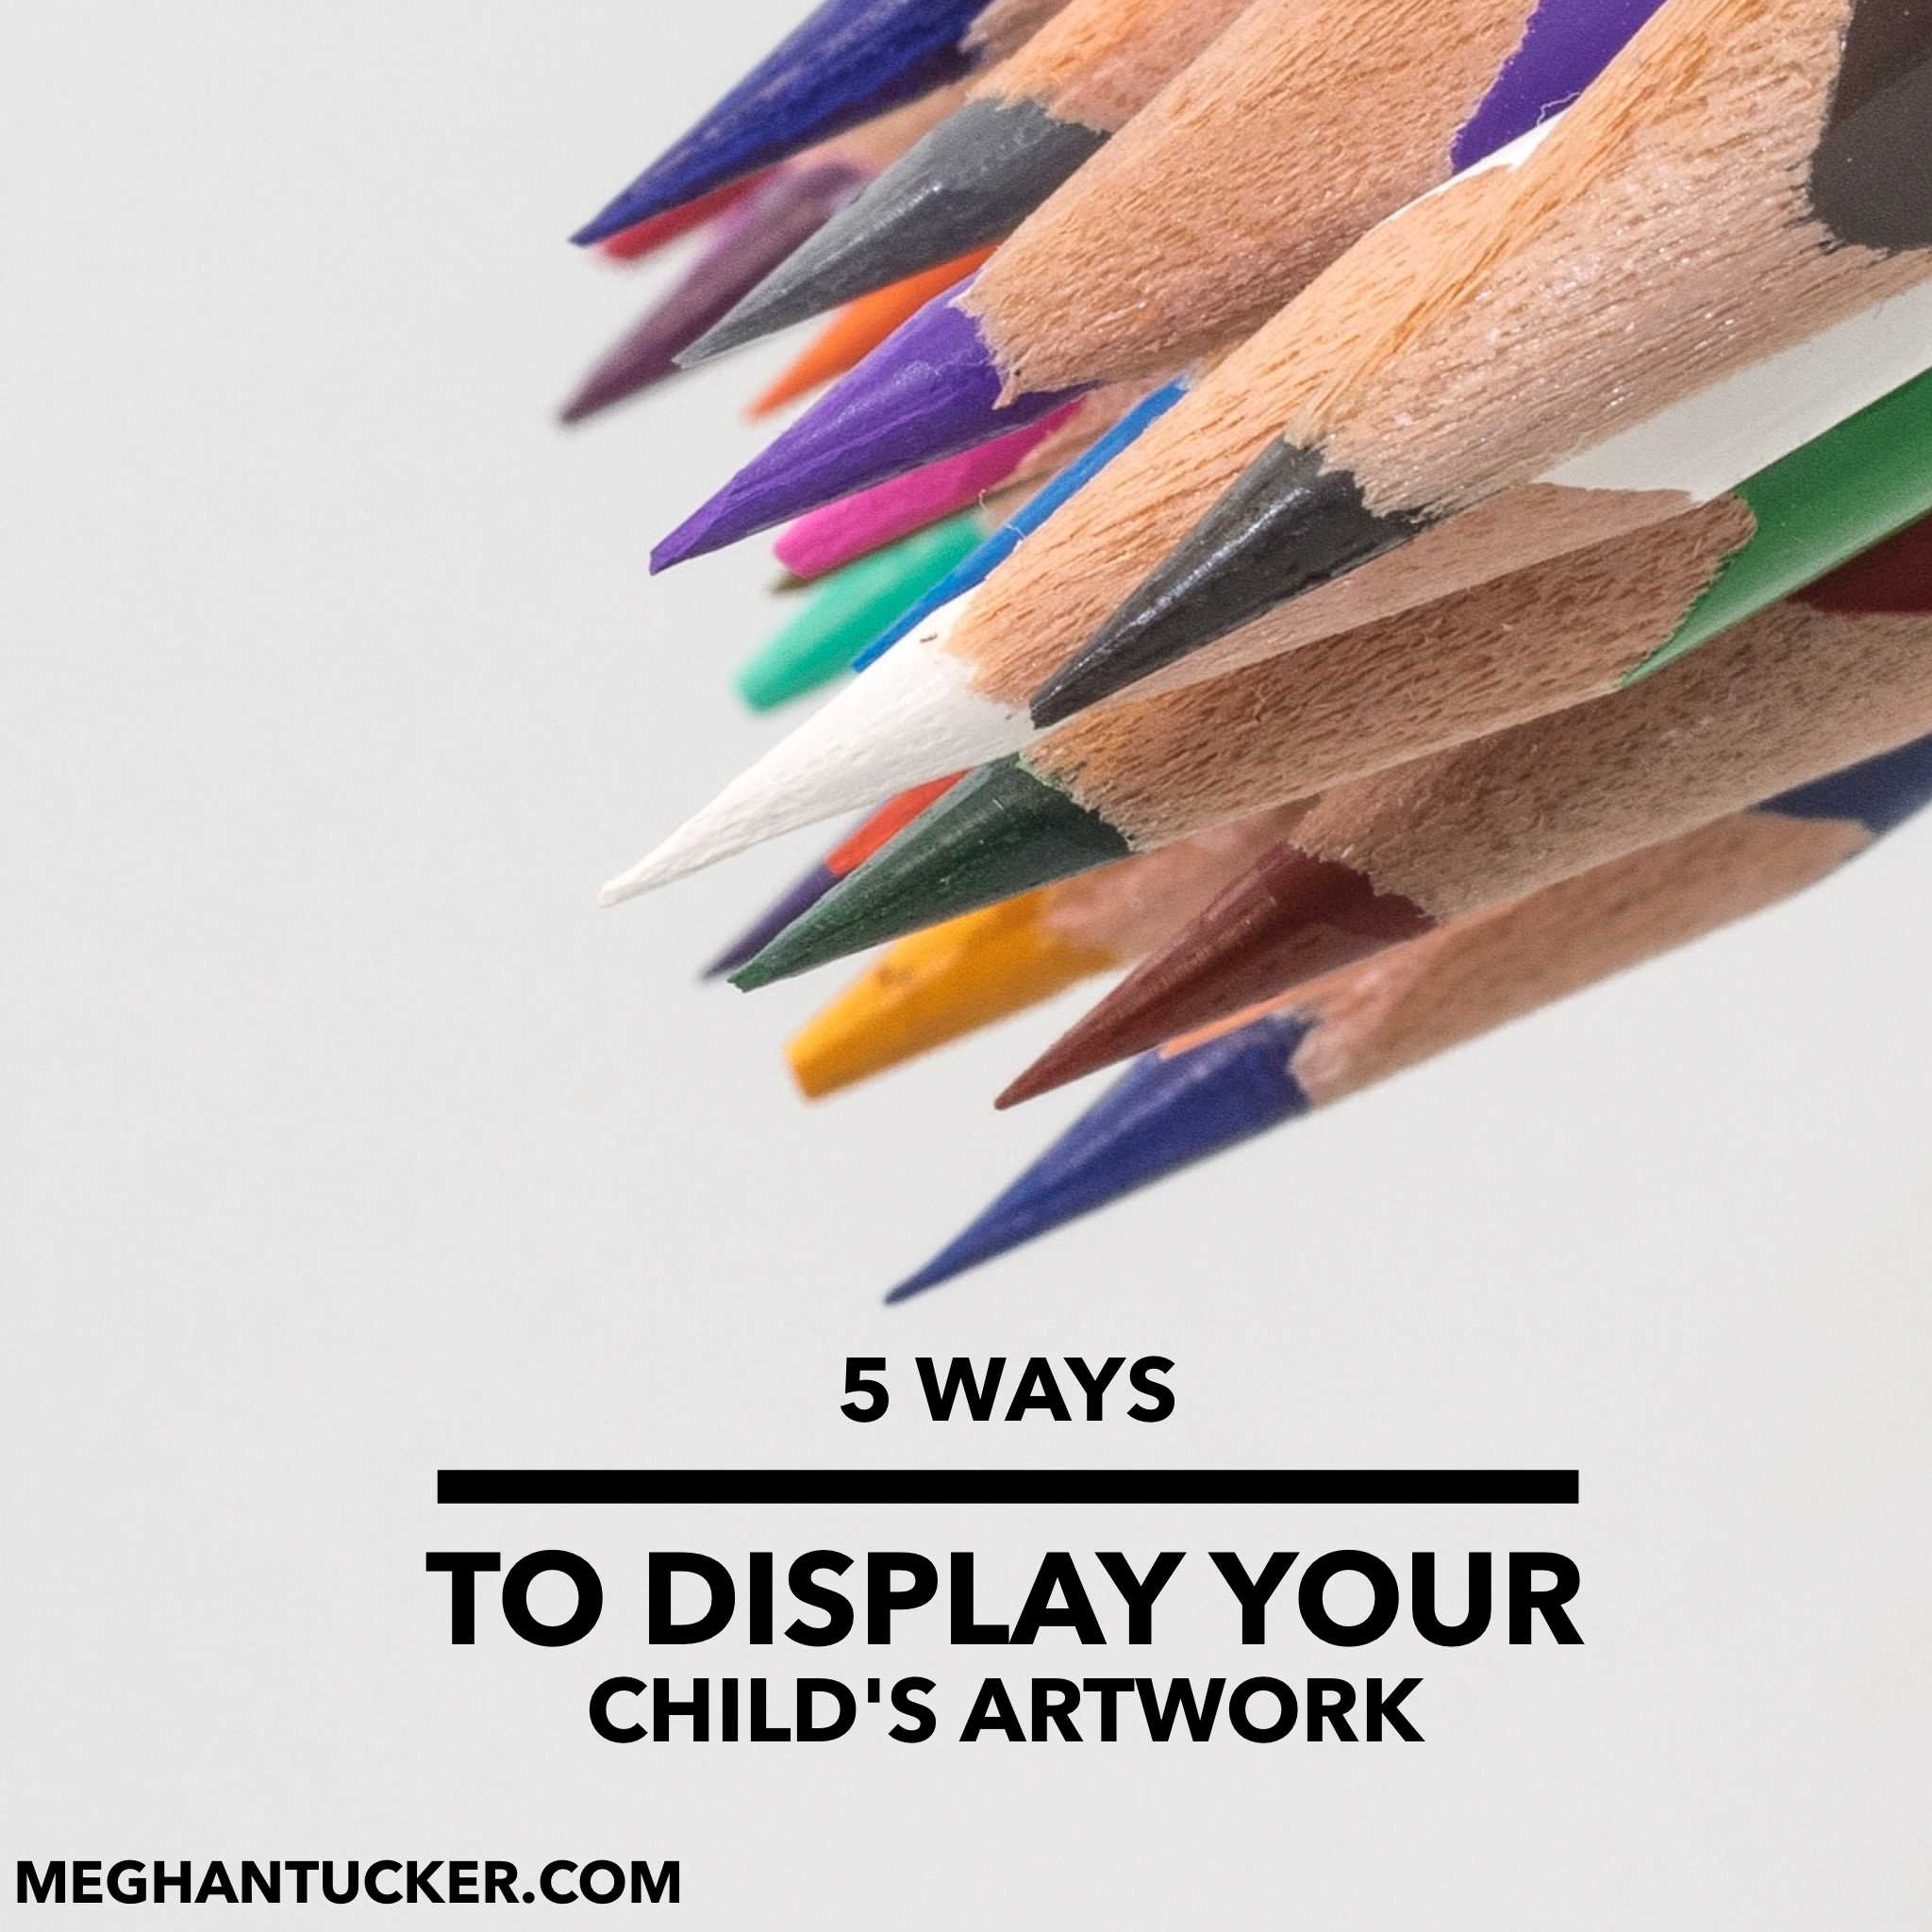 5 Ways to Display Your Child’s Artwork